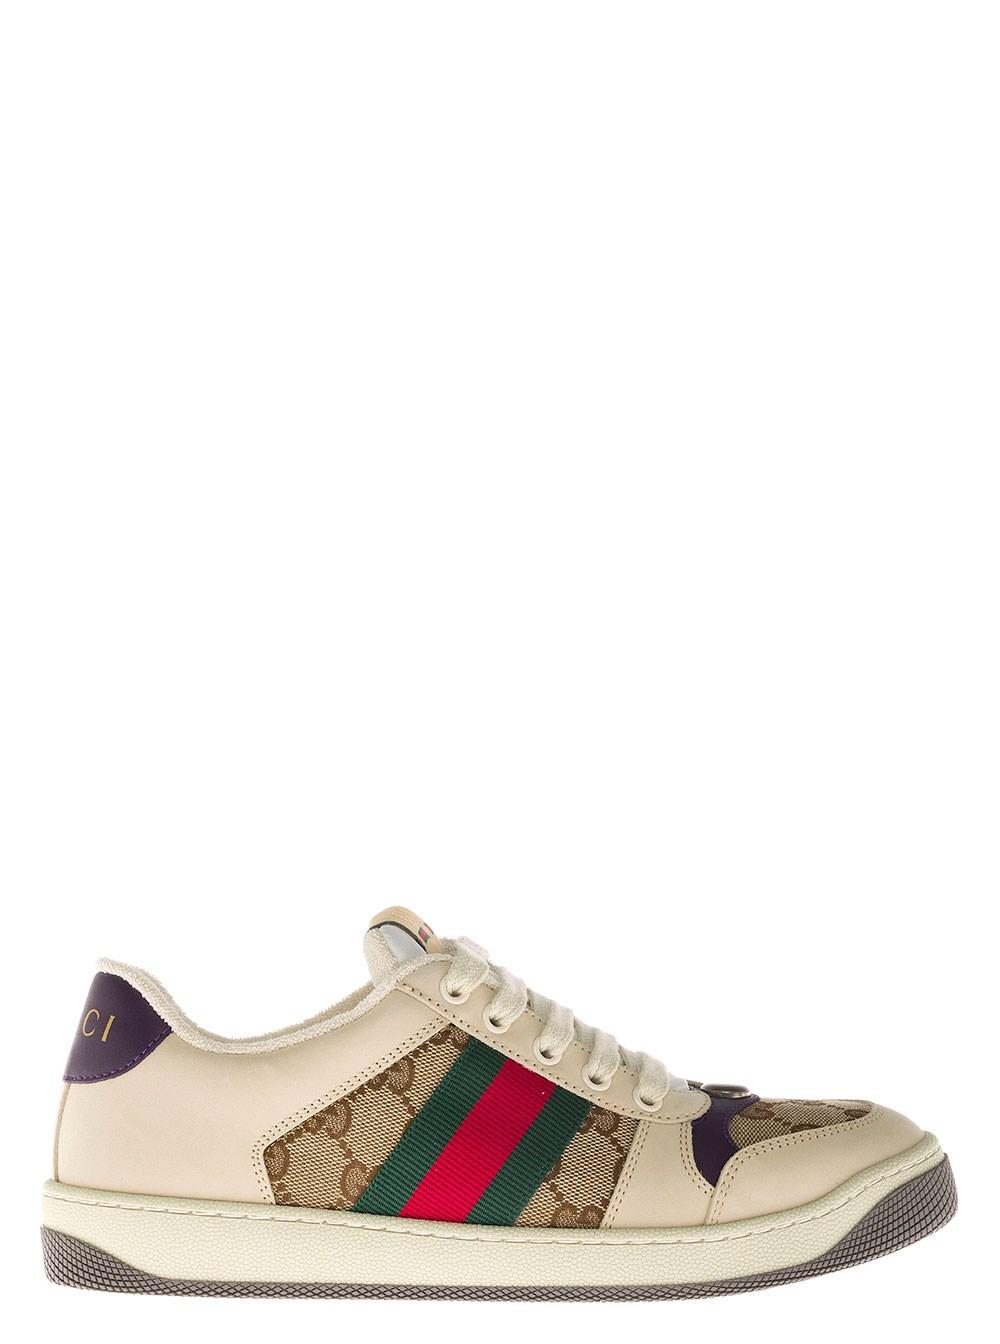 Gucci Screener Multicolor gg Fabric Sneakers in White | Lyst